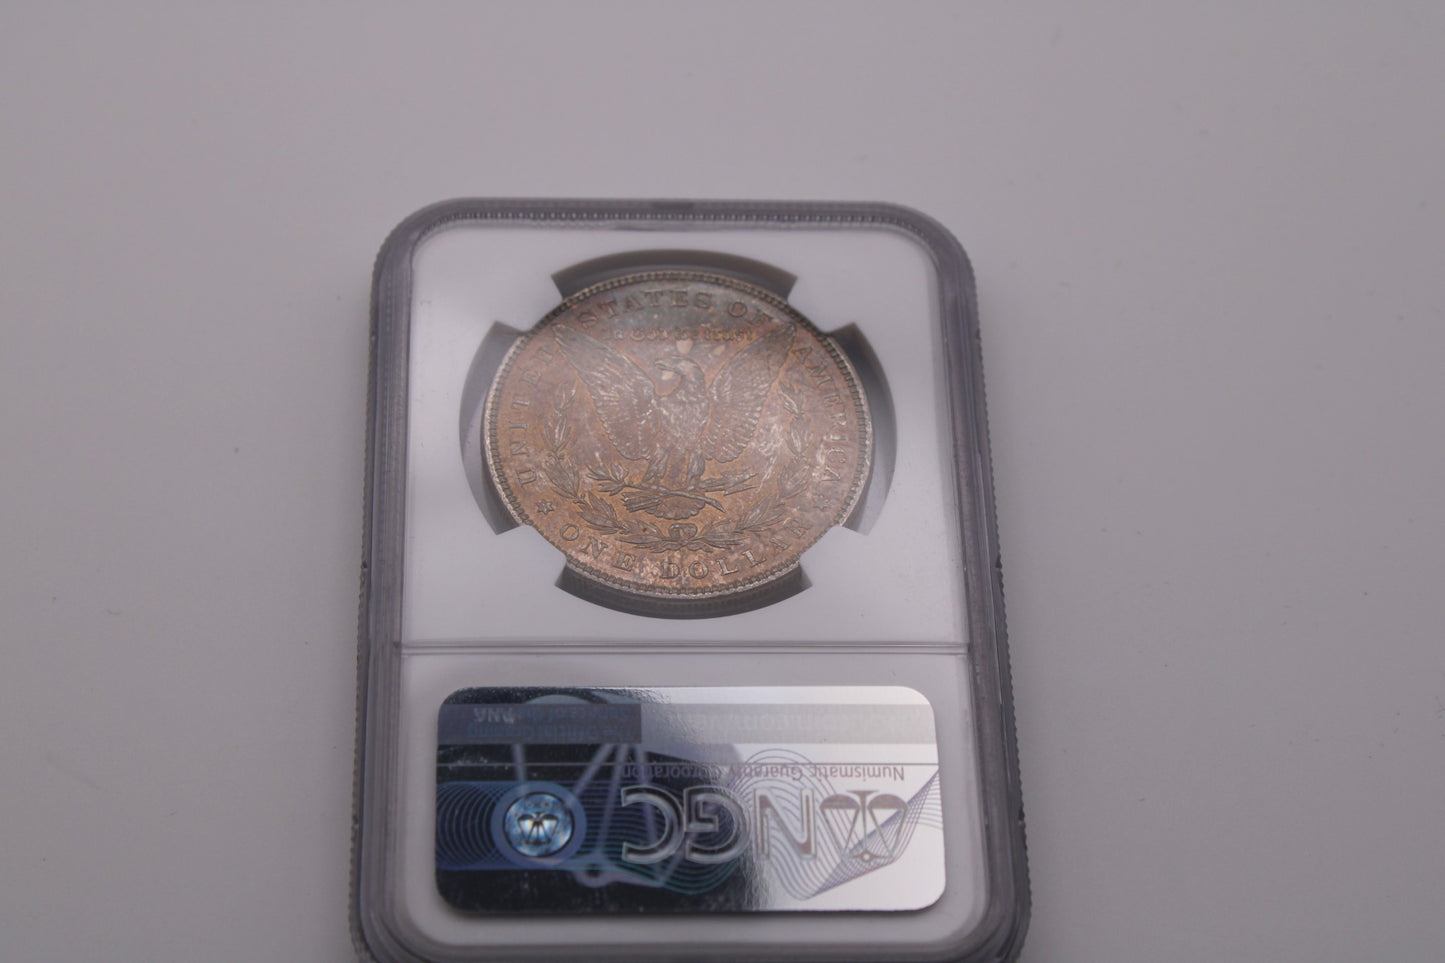 1885 P Morgan Dollar NGC MS-65 CAC reverse is toned